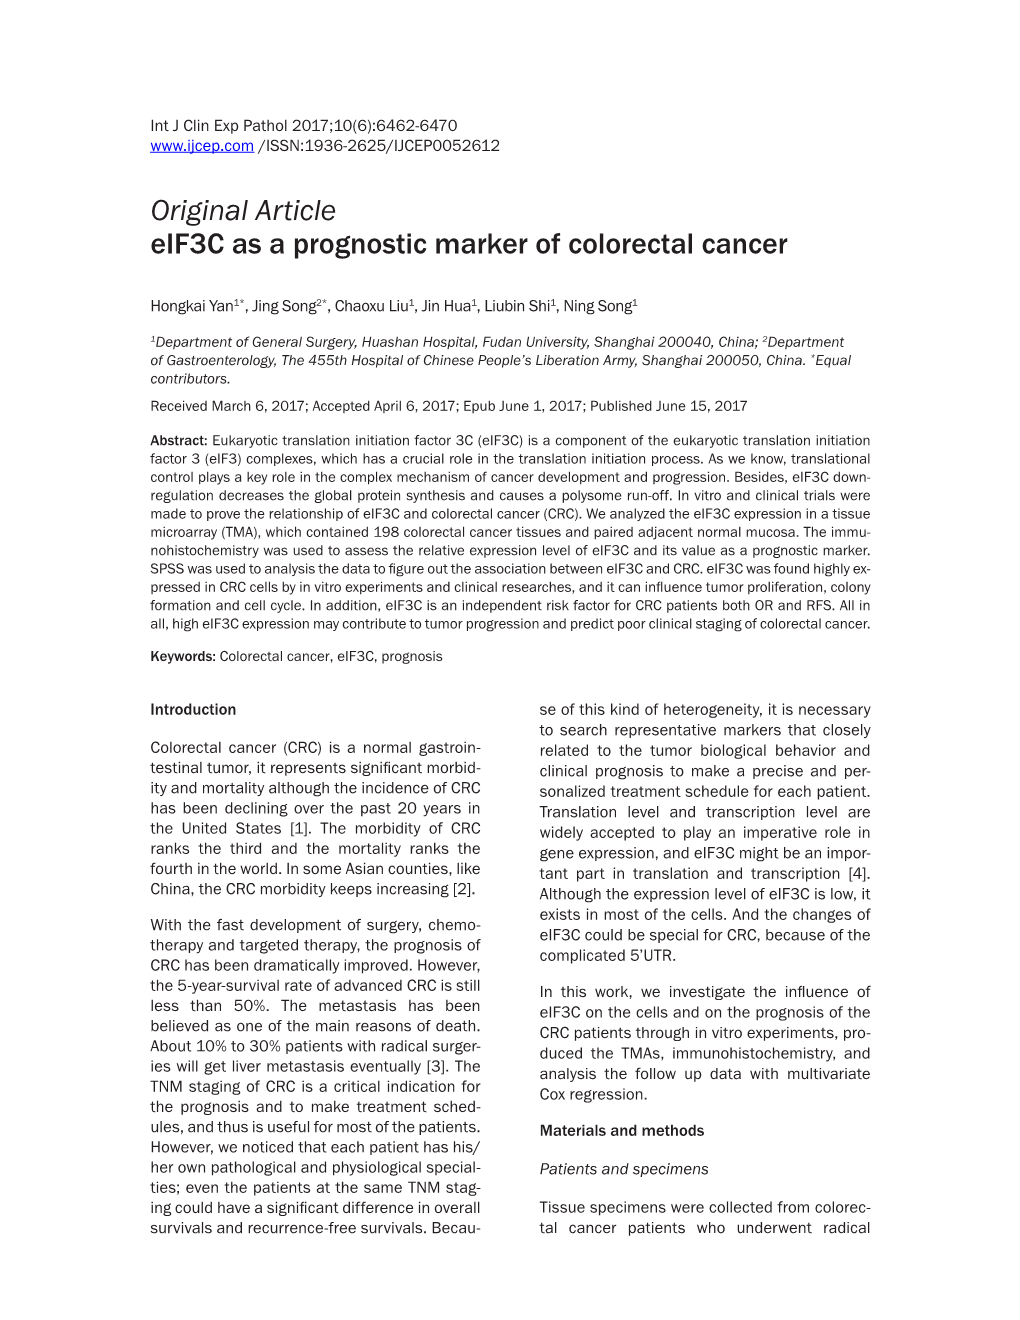 Original Article Eif3c As a Prognostic Marker of Colorectal Cancer